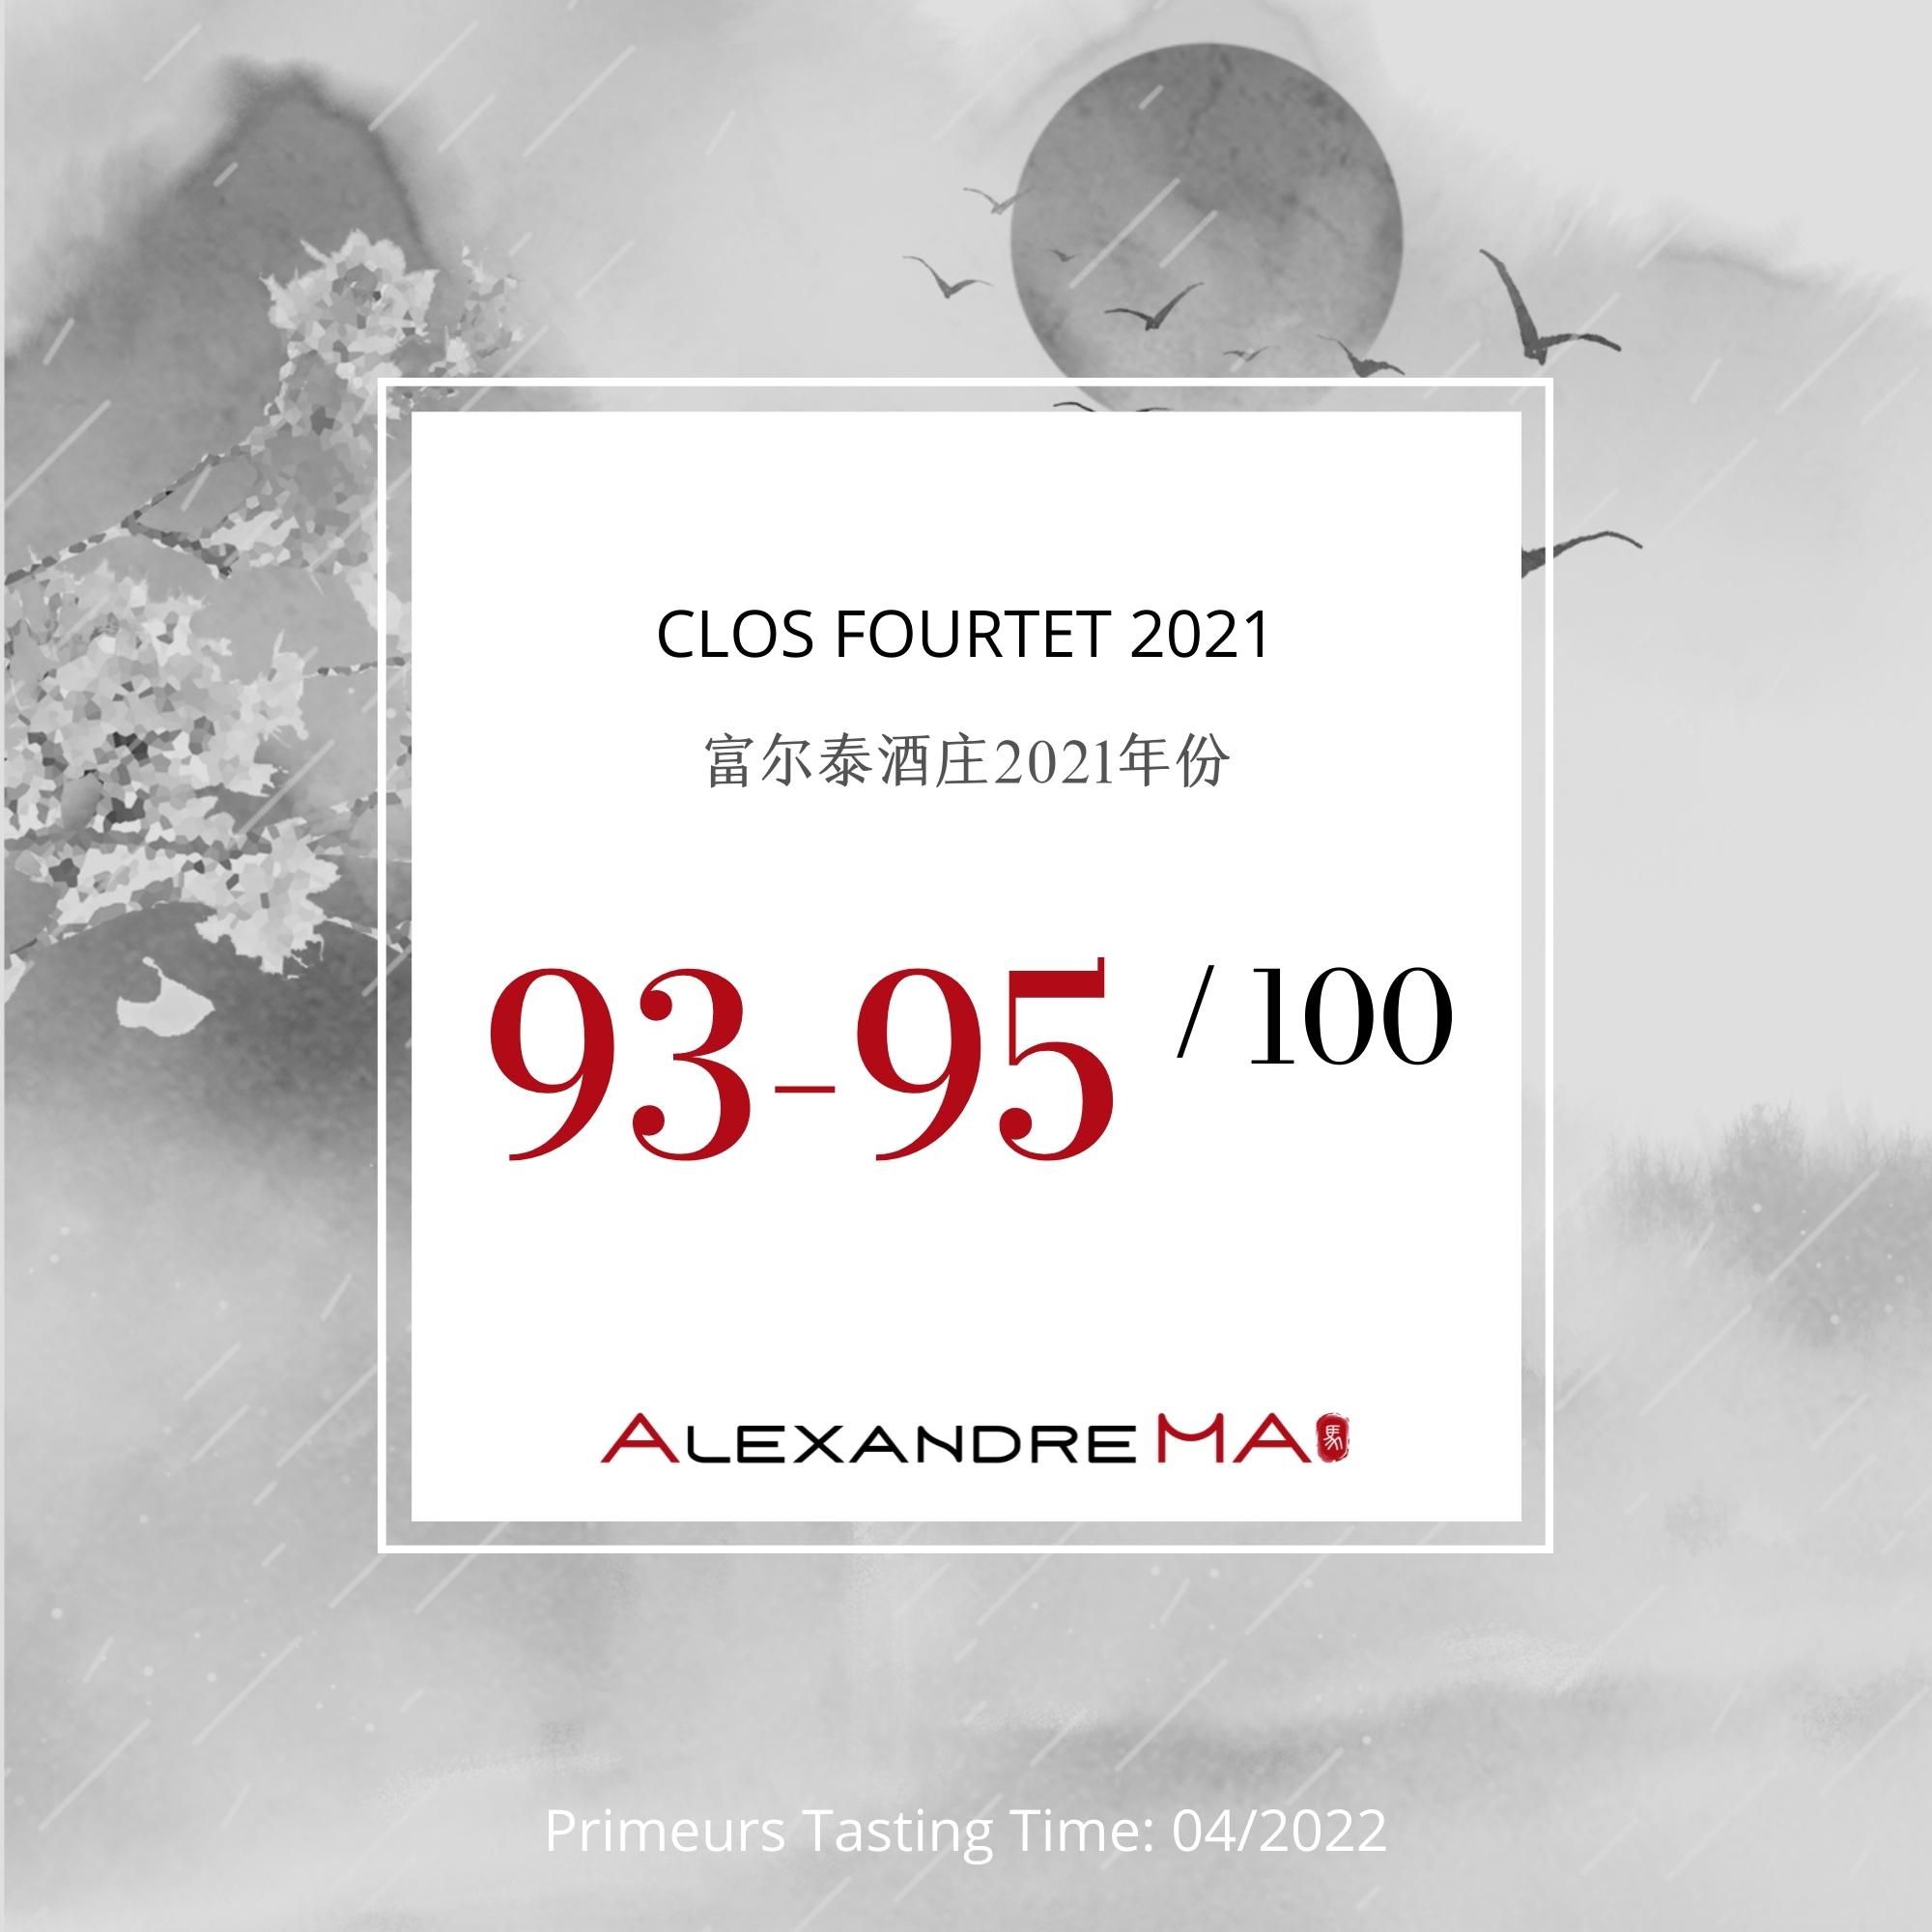 Clos Fourtet 2021 - Alexandre MA